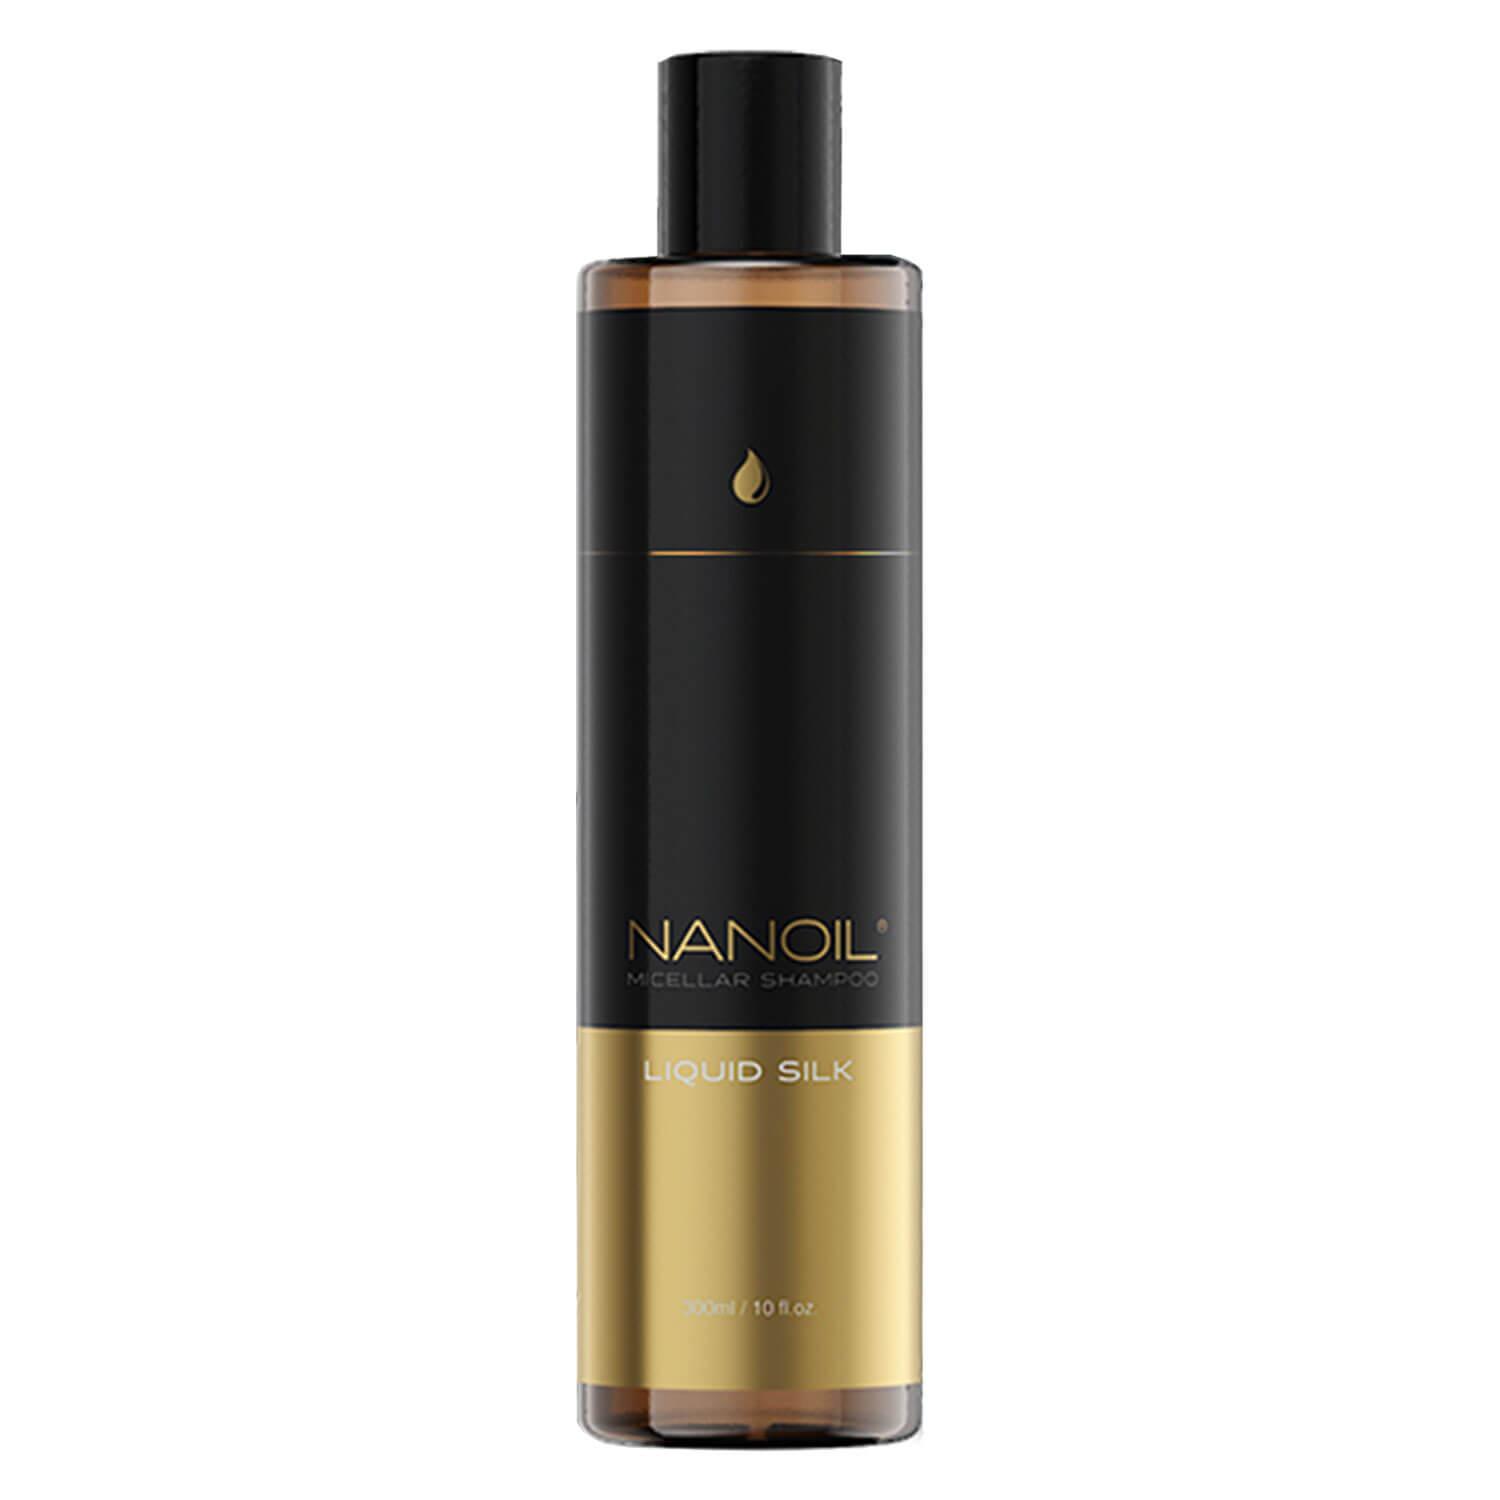 Nanoil - Liquid Silk Micellar Shampoo